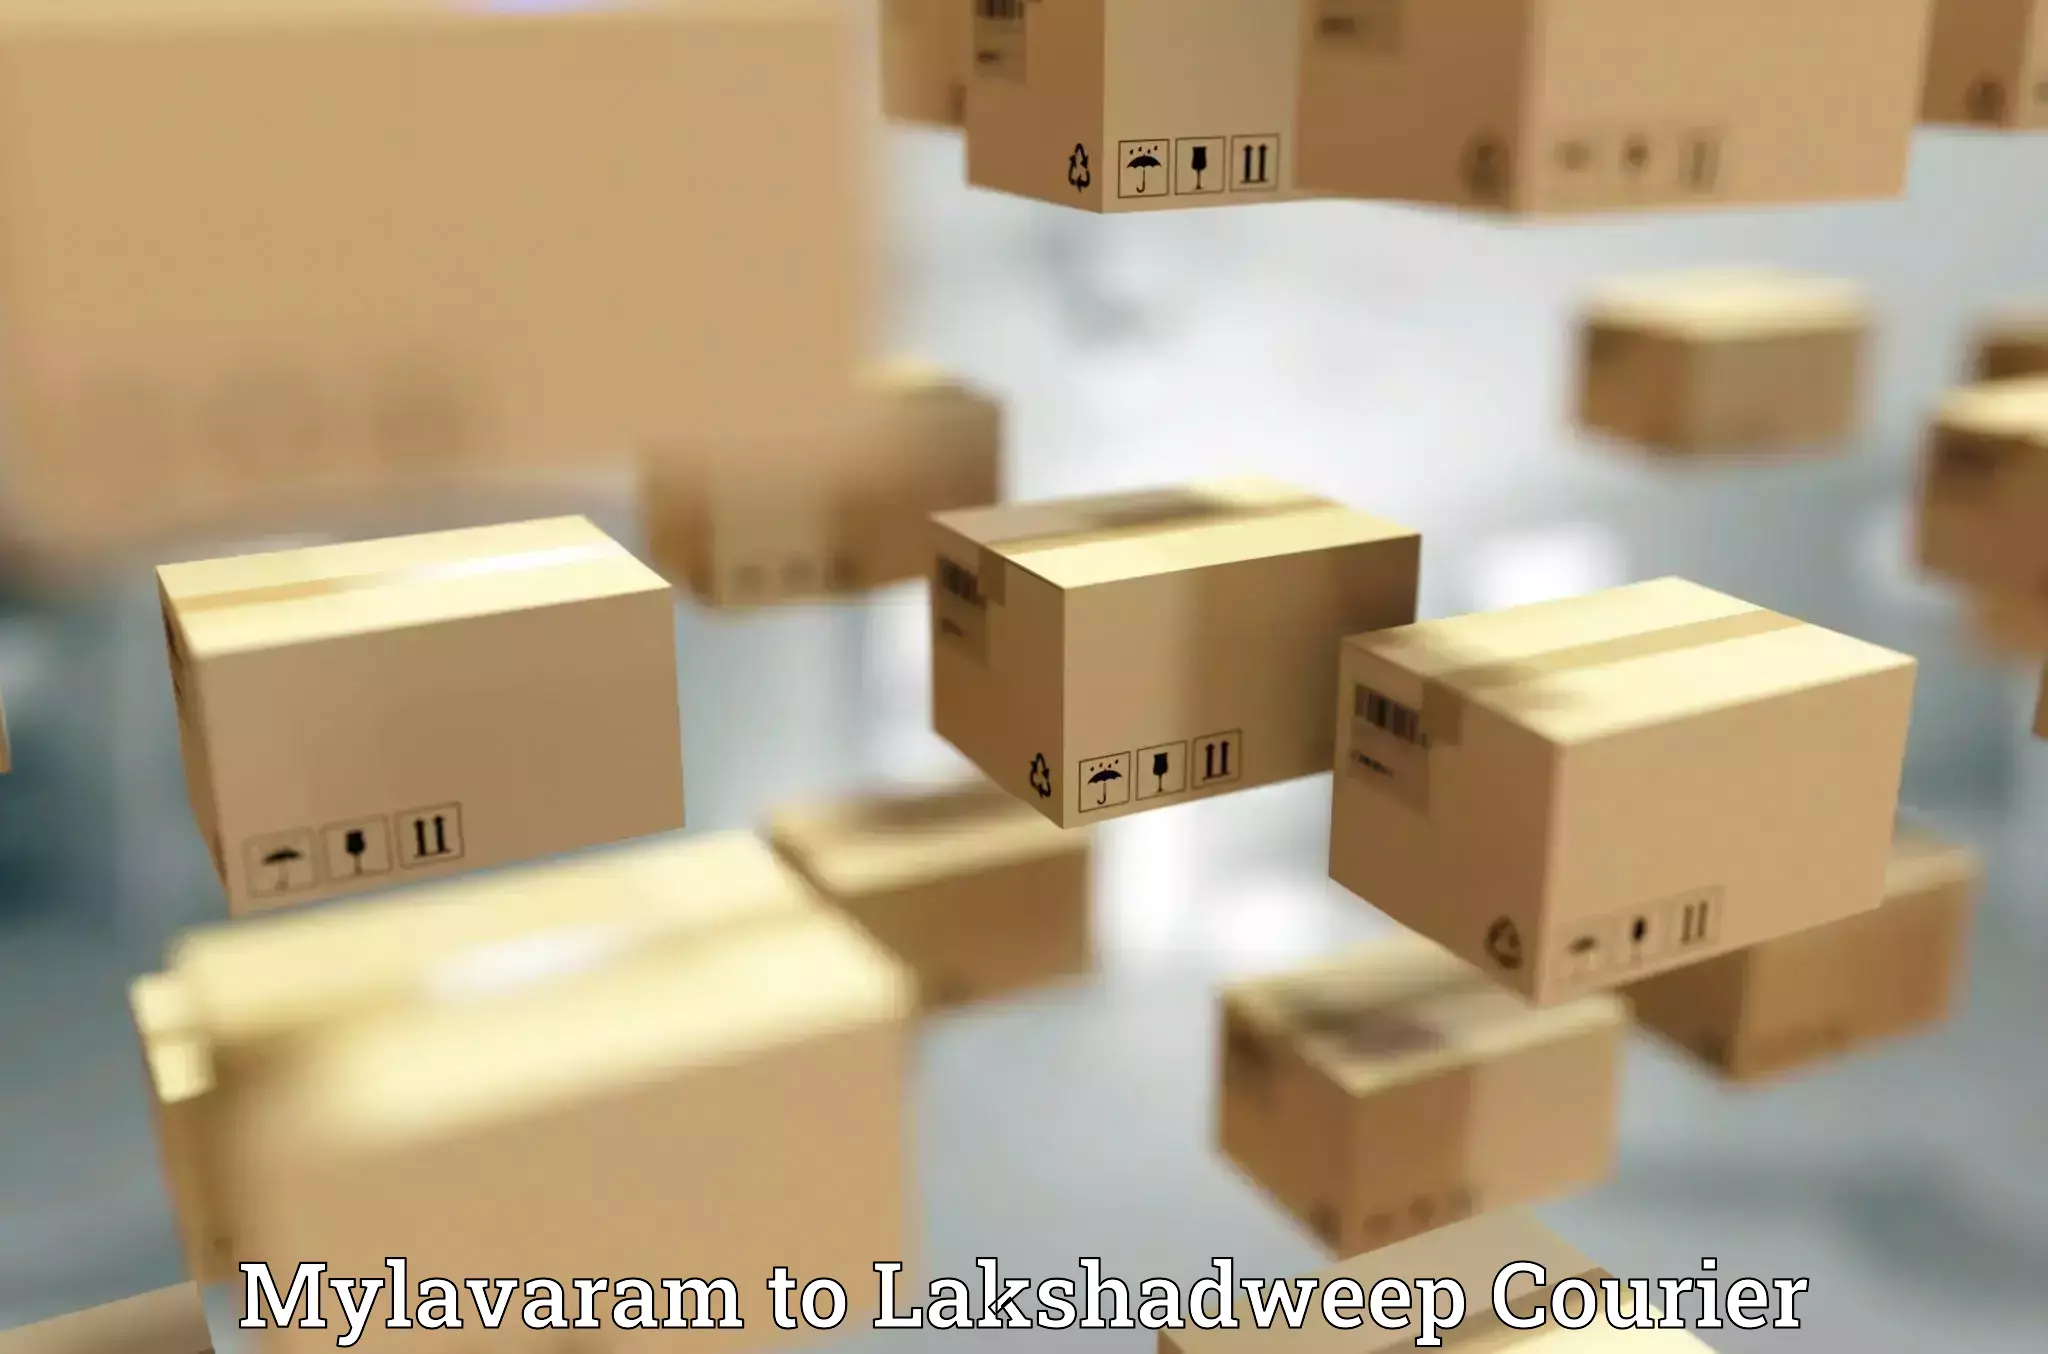 Global logistics network Mylavaram to Lakshadweep